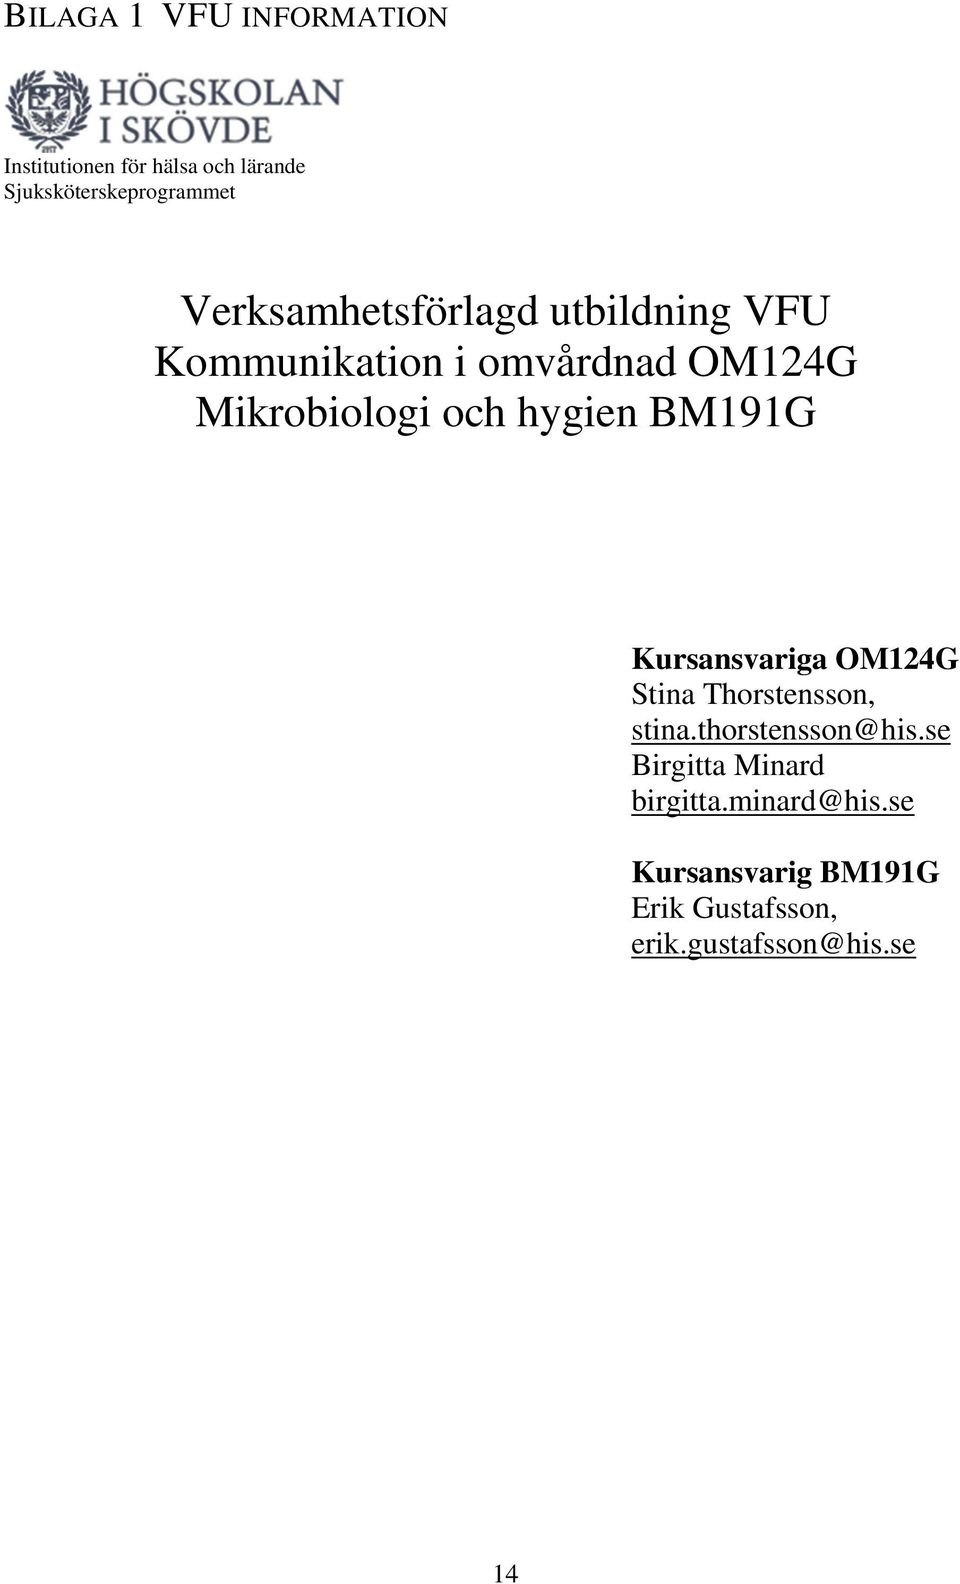 hygien BM191G Kursansvariga OM124G Stina Thorstensson, stina.thorstensson@his.